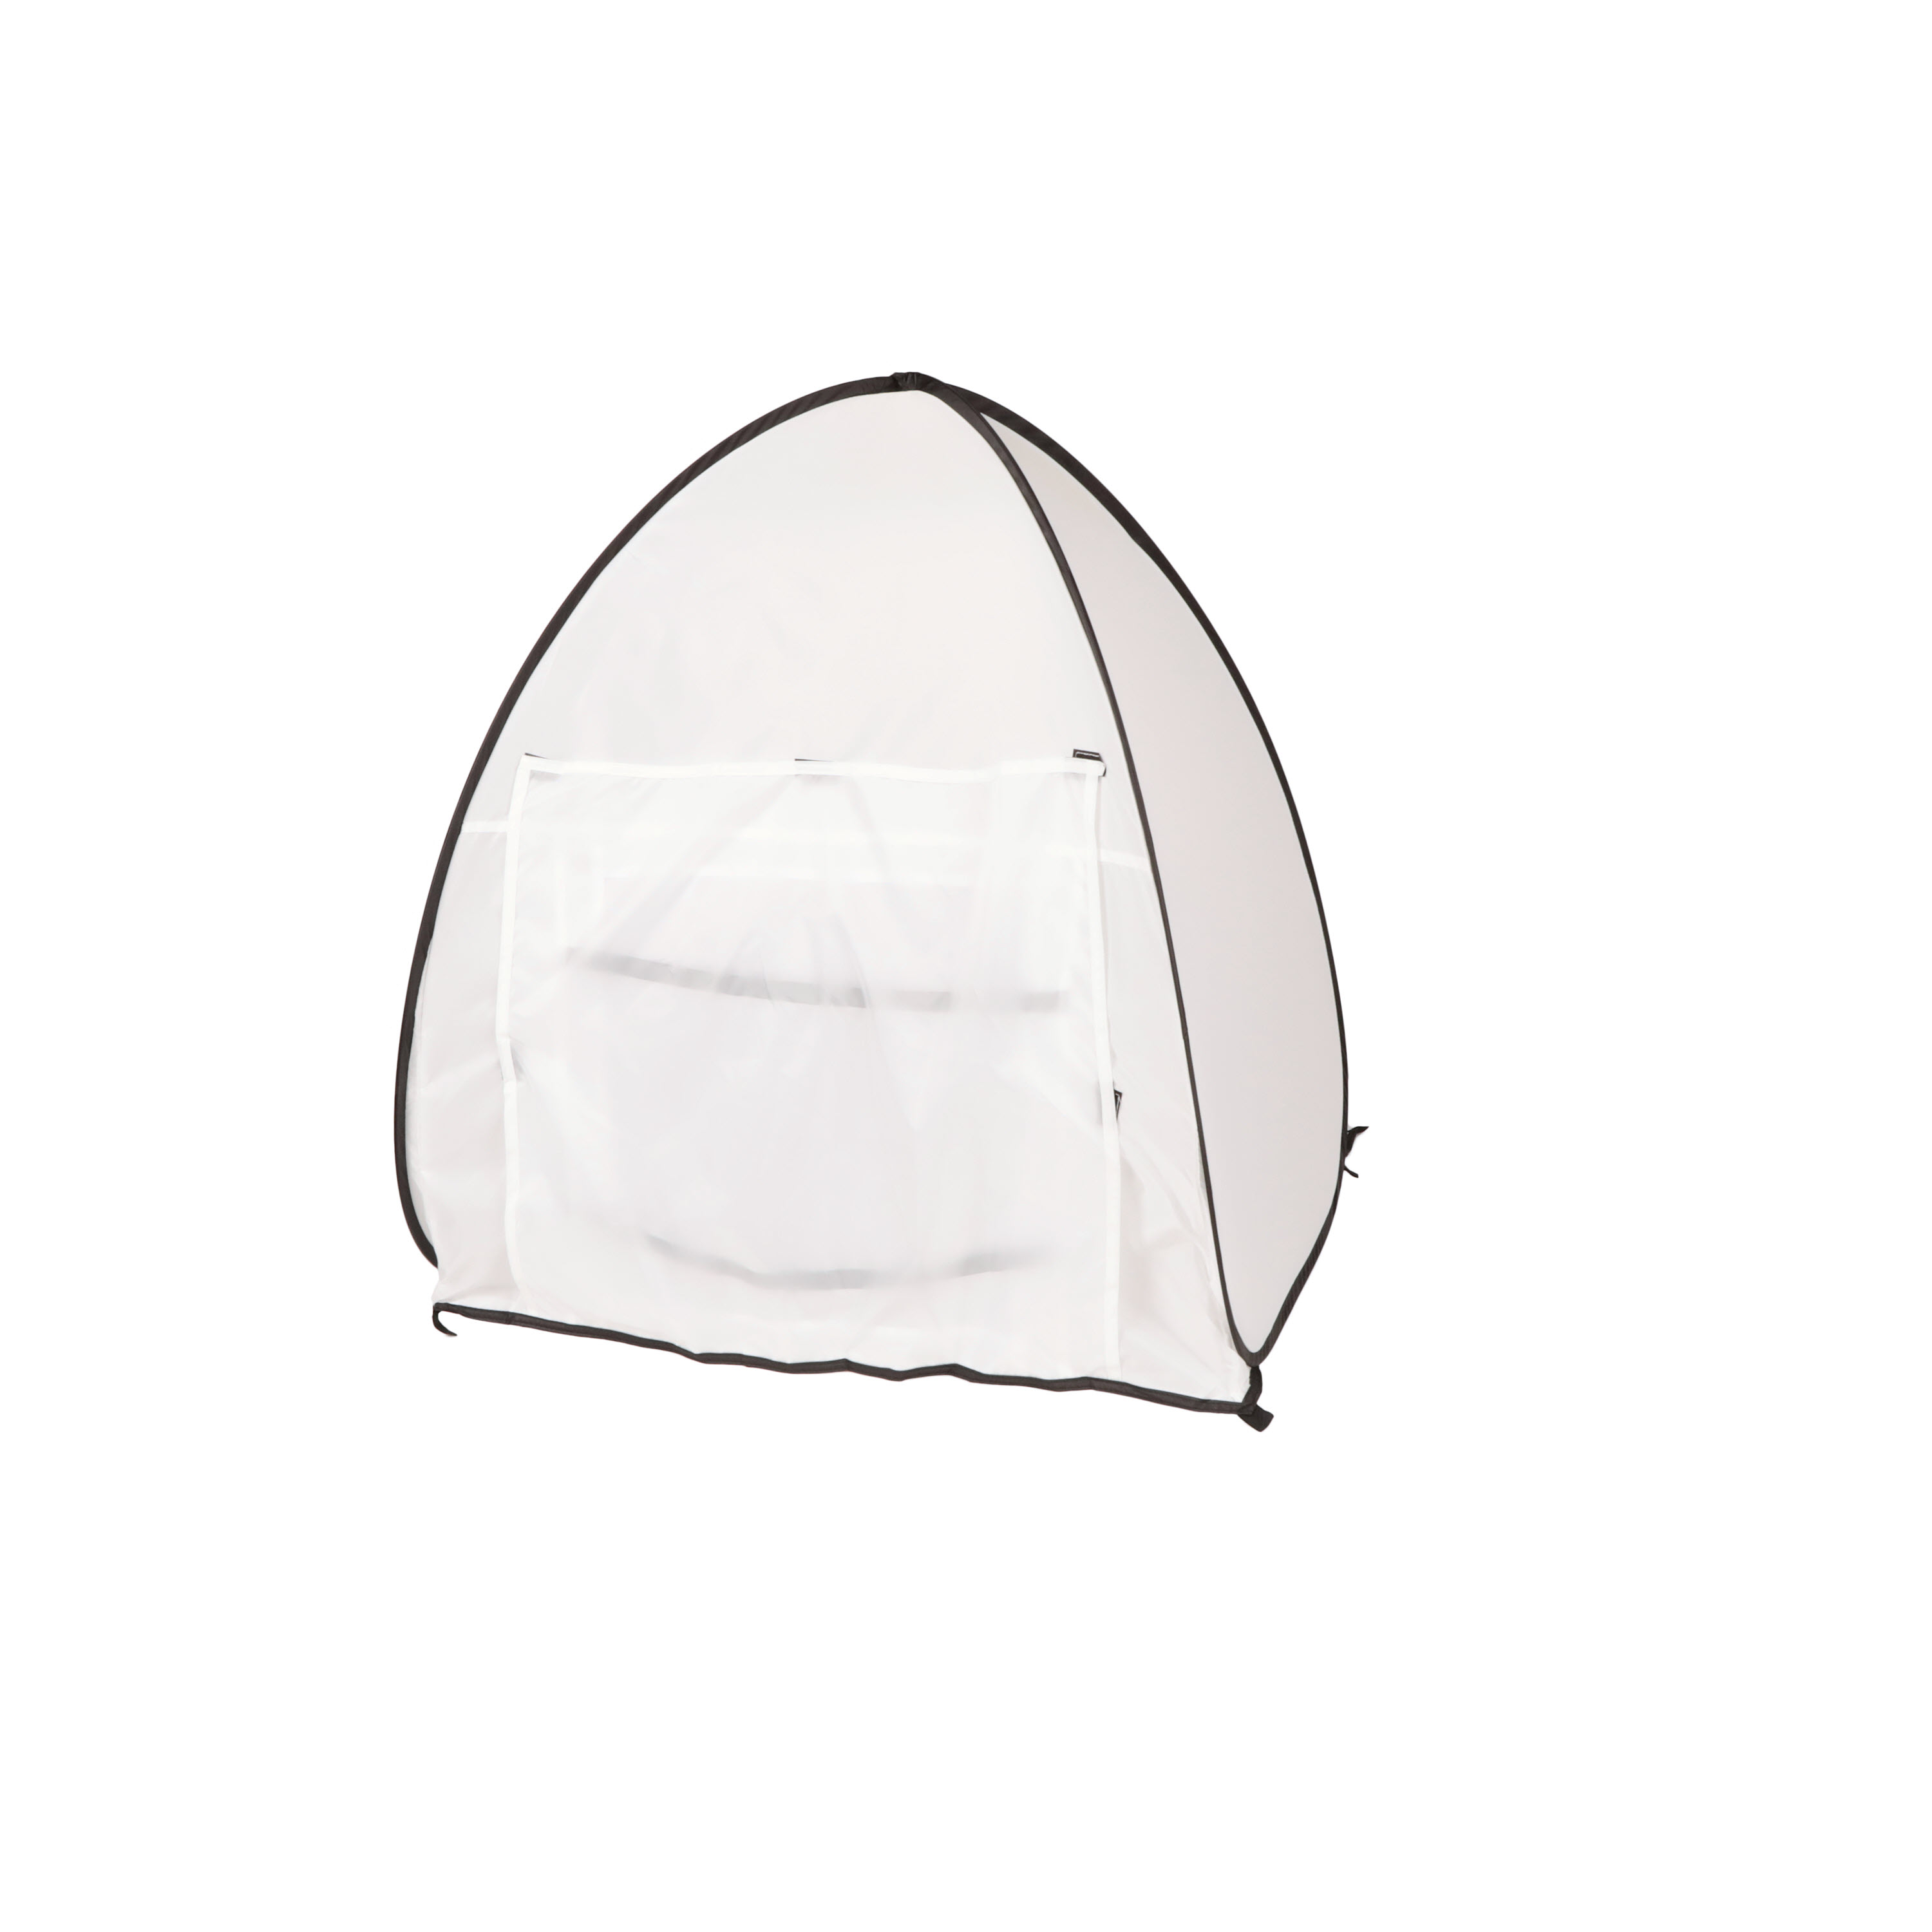 How do you set up a Homeright Spray Tent Shelter? - Infarrantly Creative